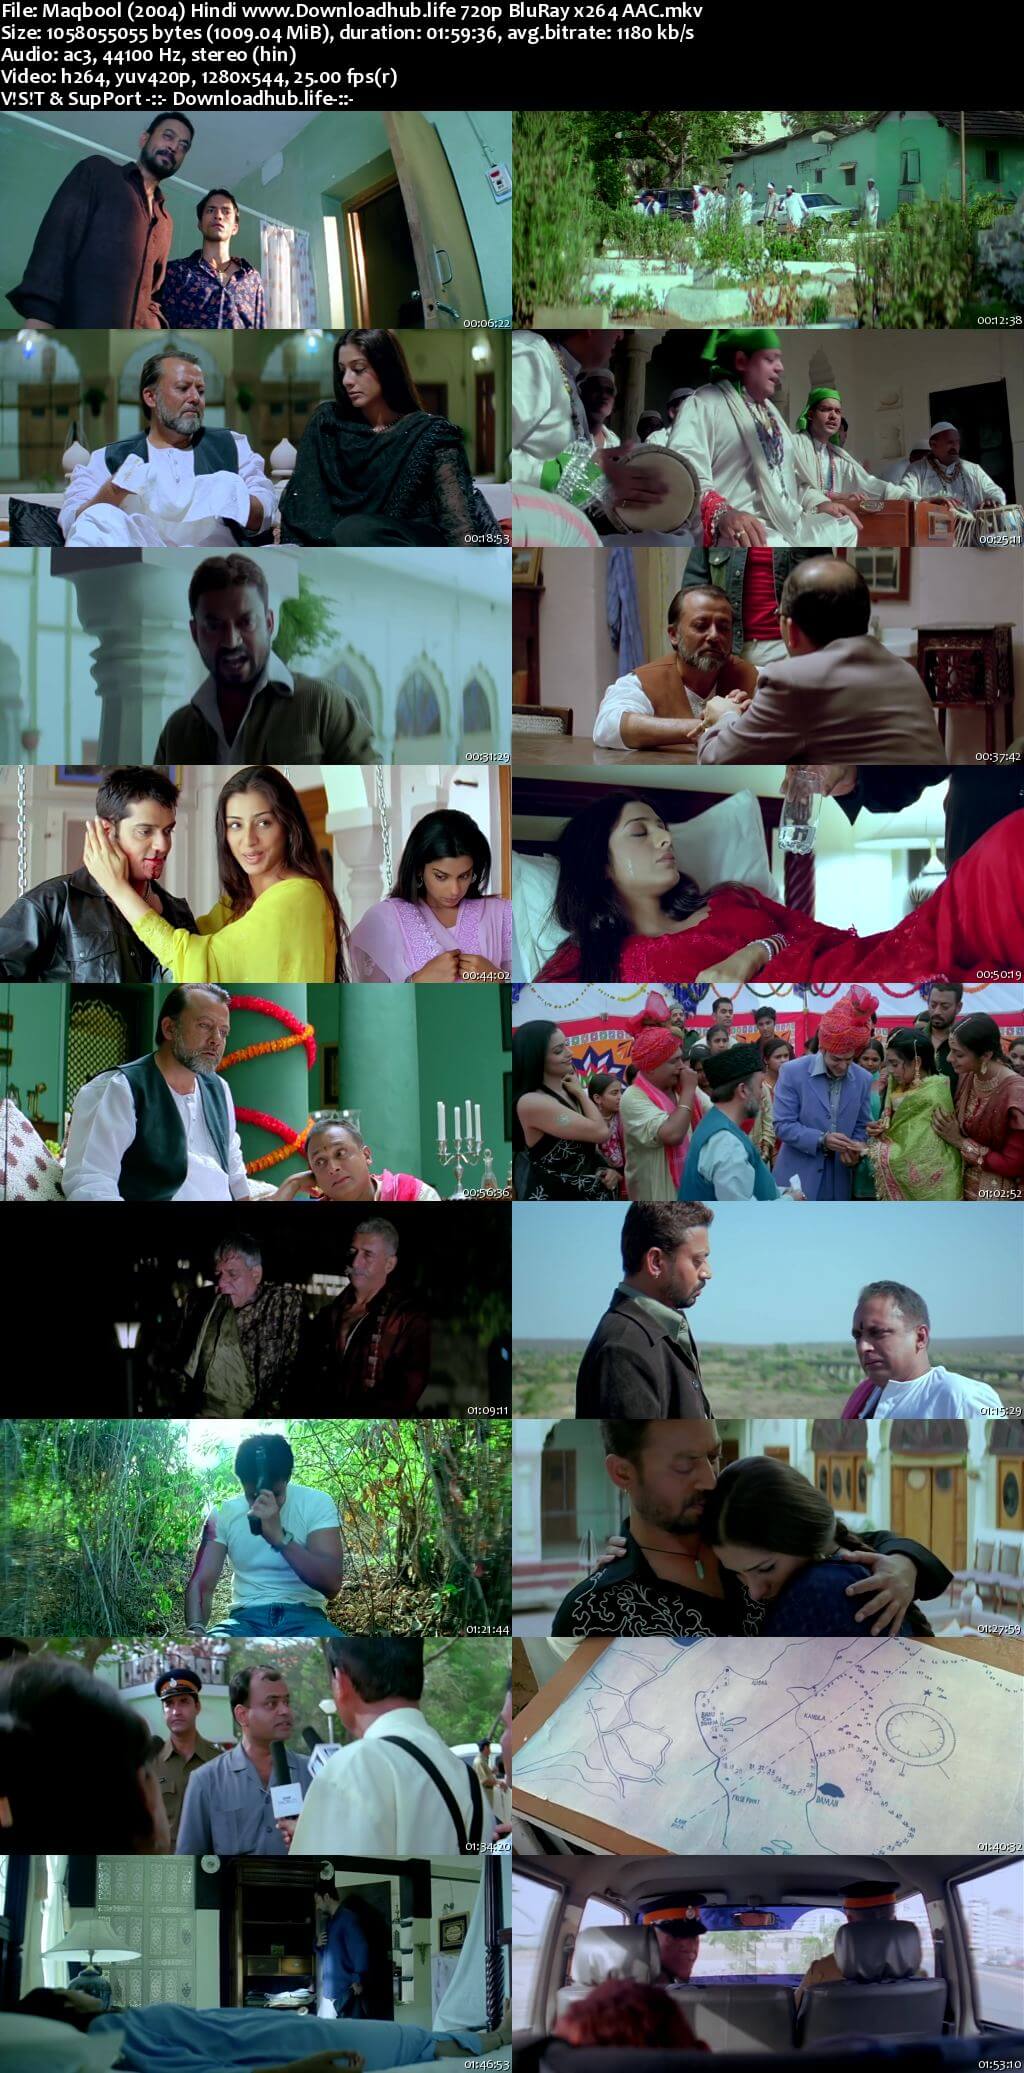 Maqbool 2003 Hindi 720p BluRay x264